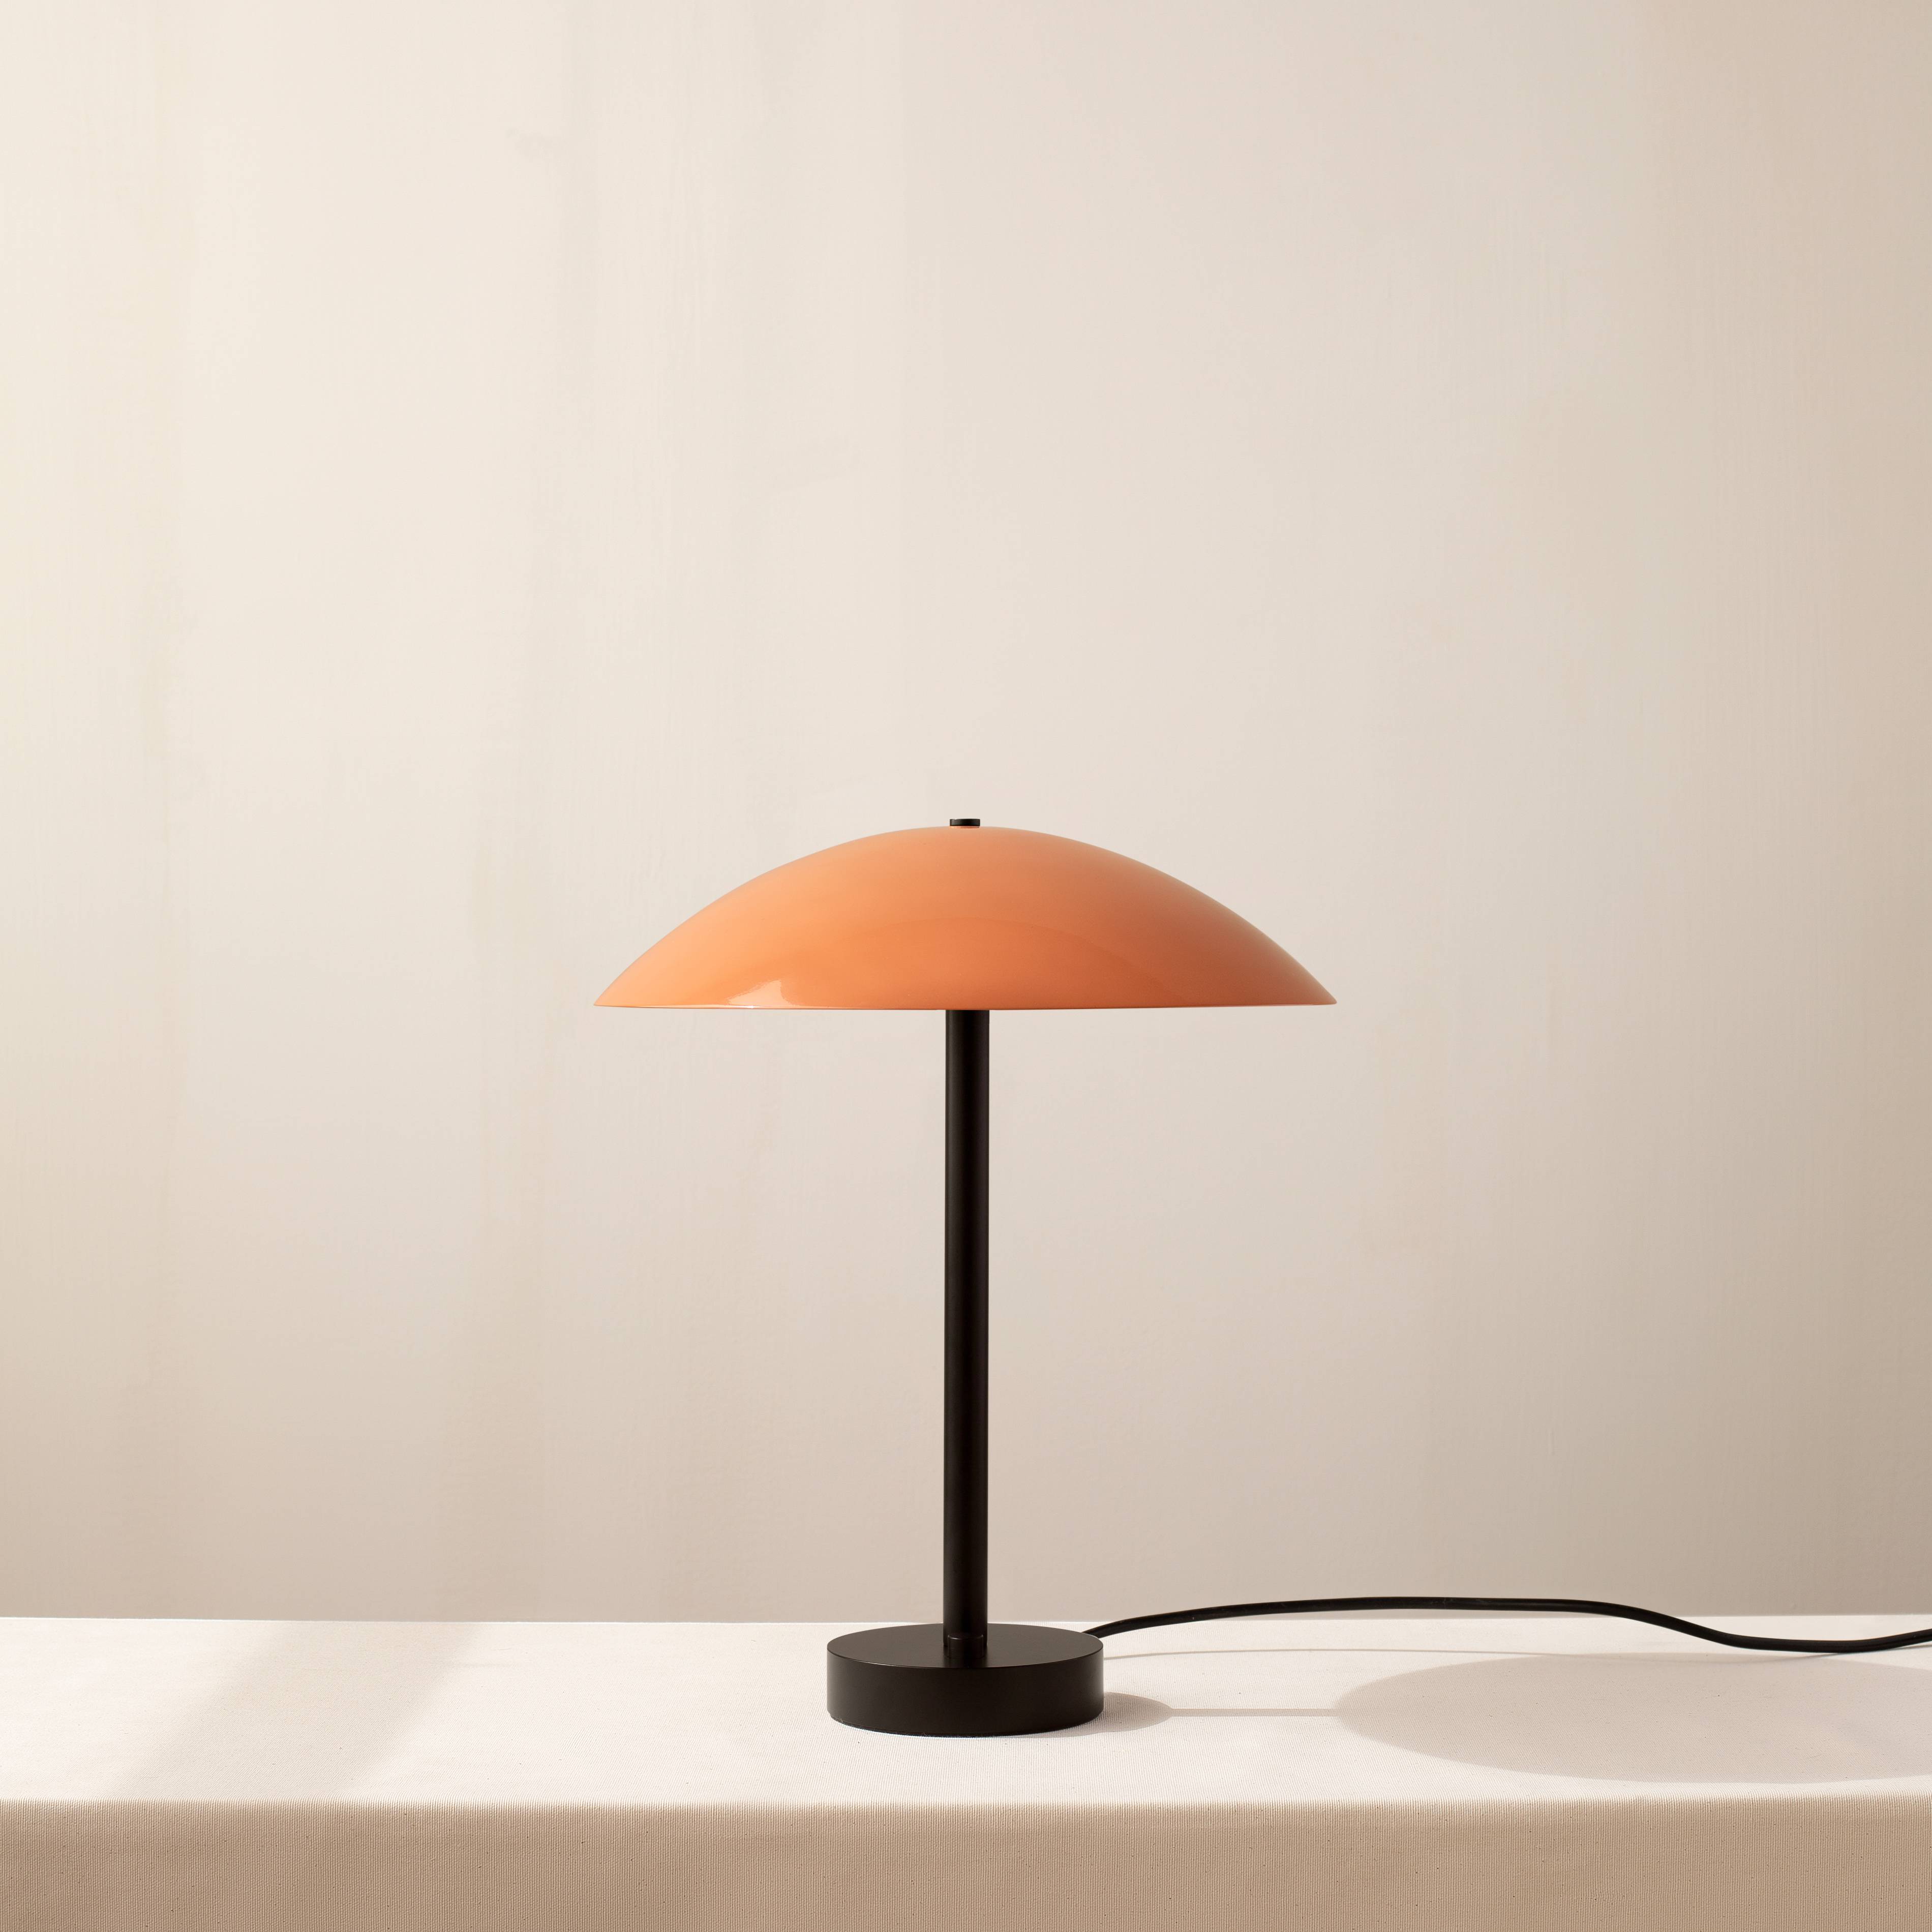 Arundel Table Lamp